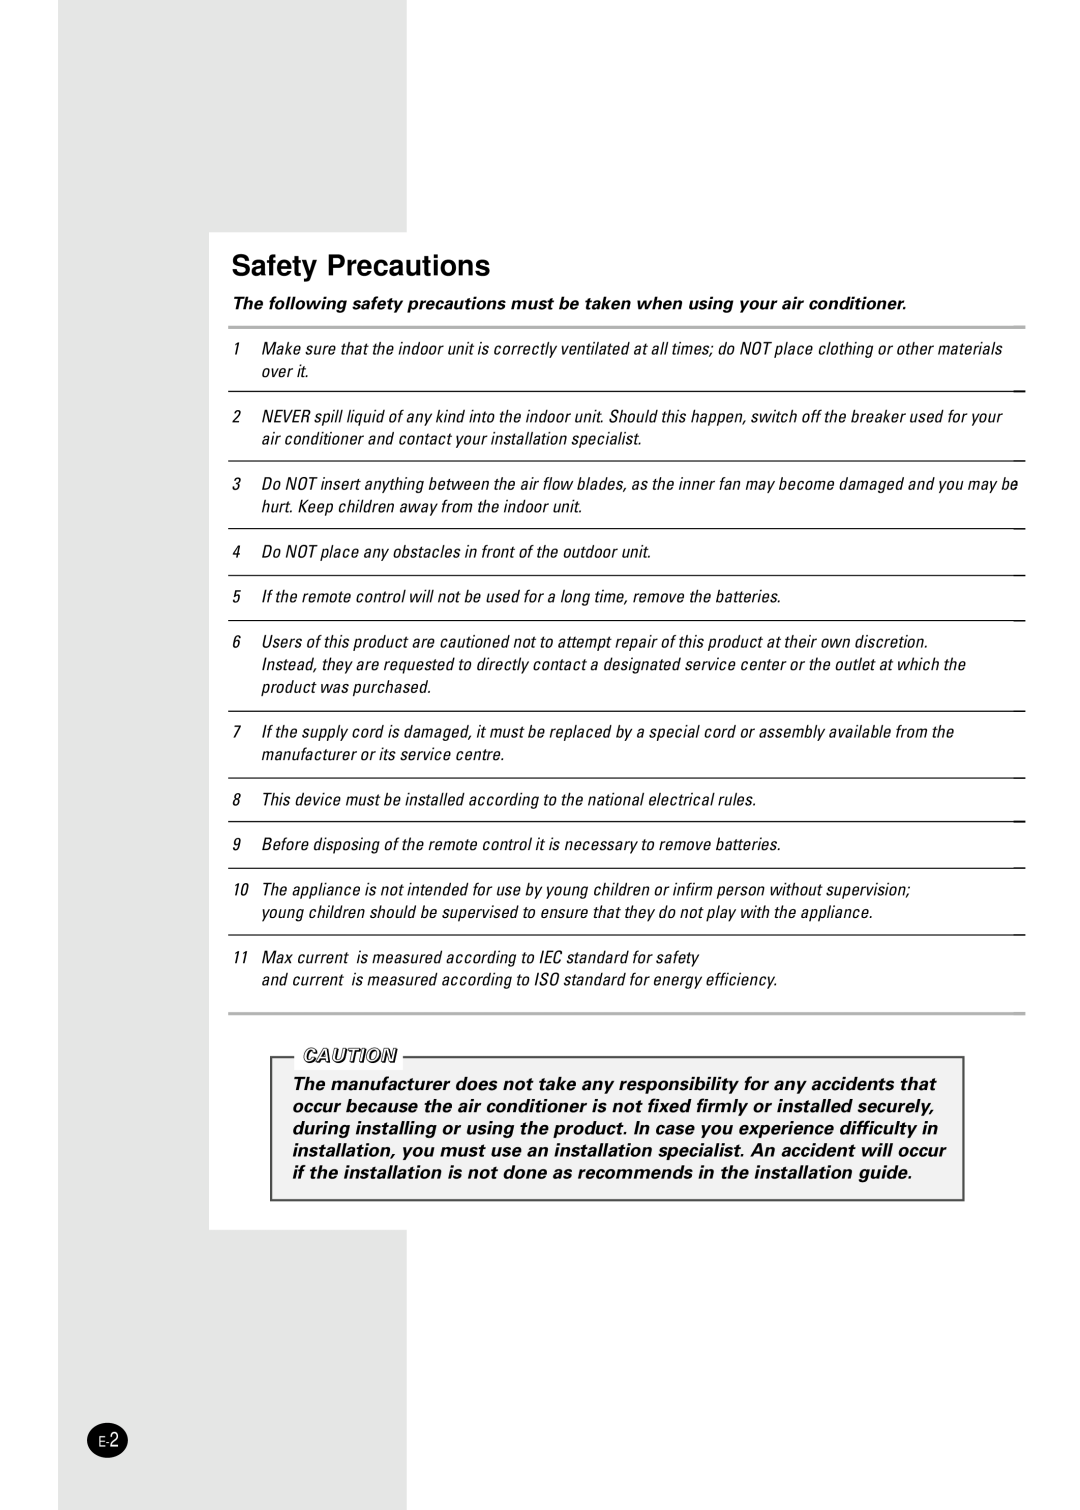 Samsung AMF18C2E, UMF26C2E3, UMF30C2E4, AMF09C2E, AMF12C2E manual Safety Precautions 